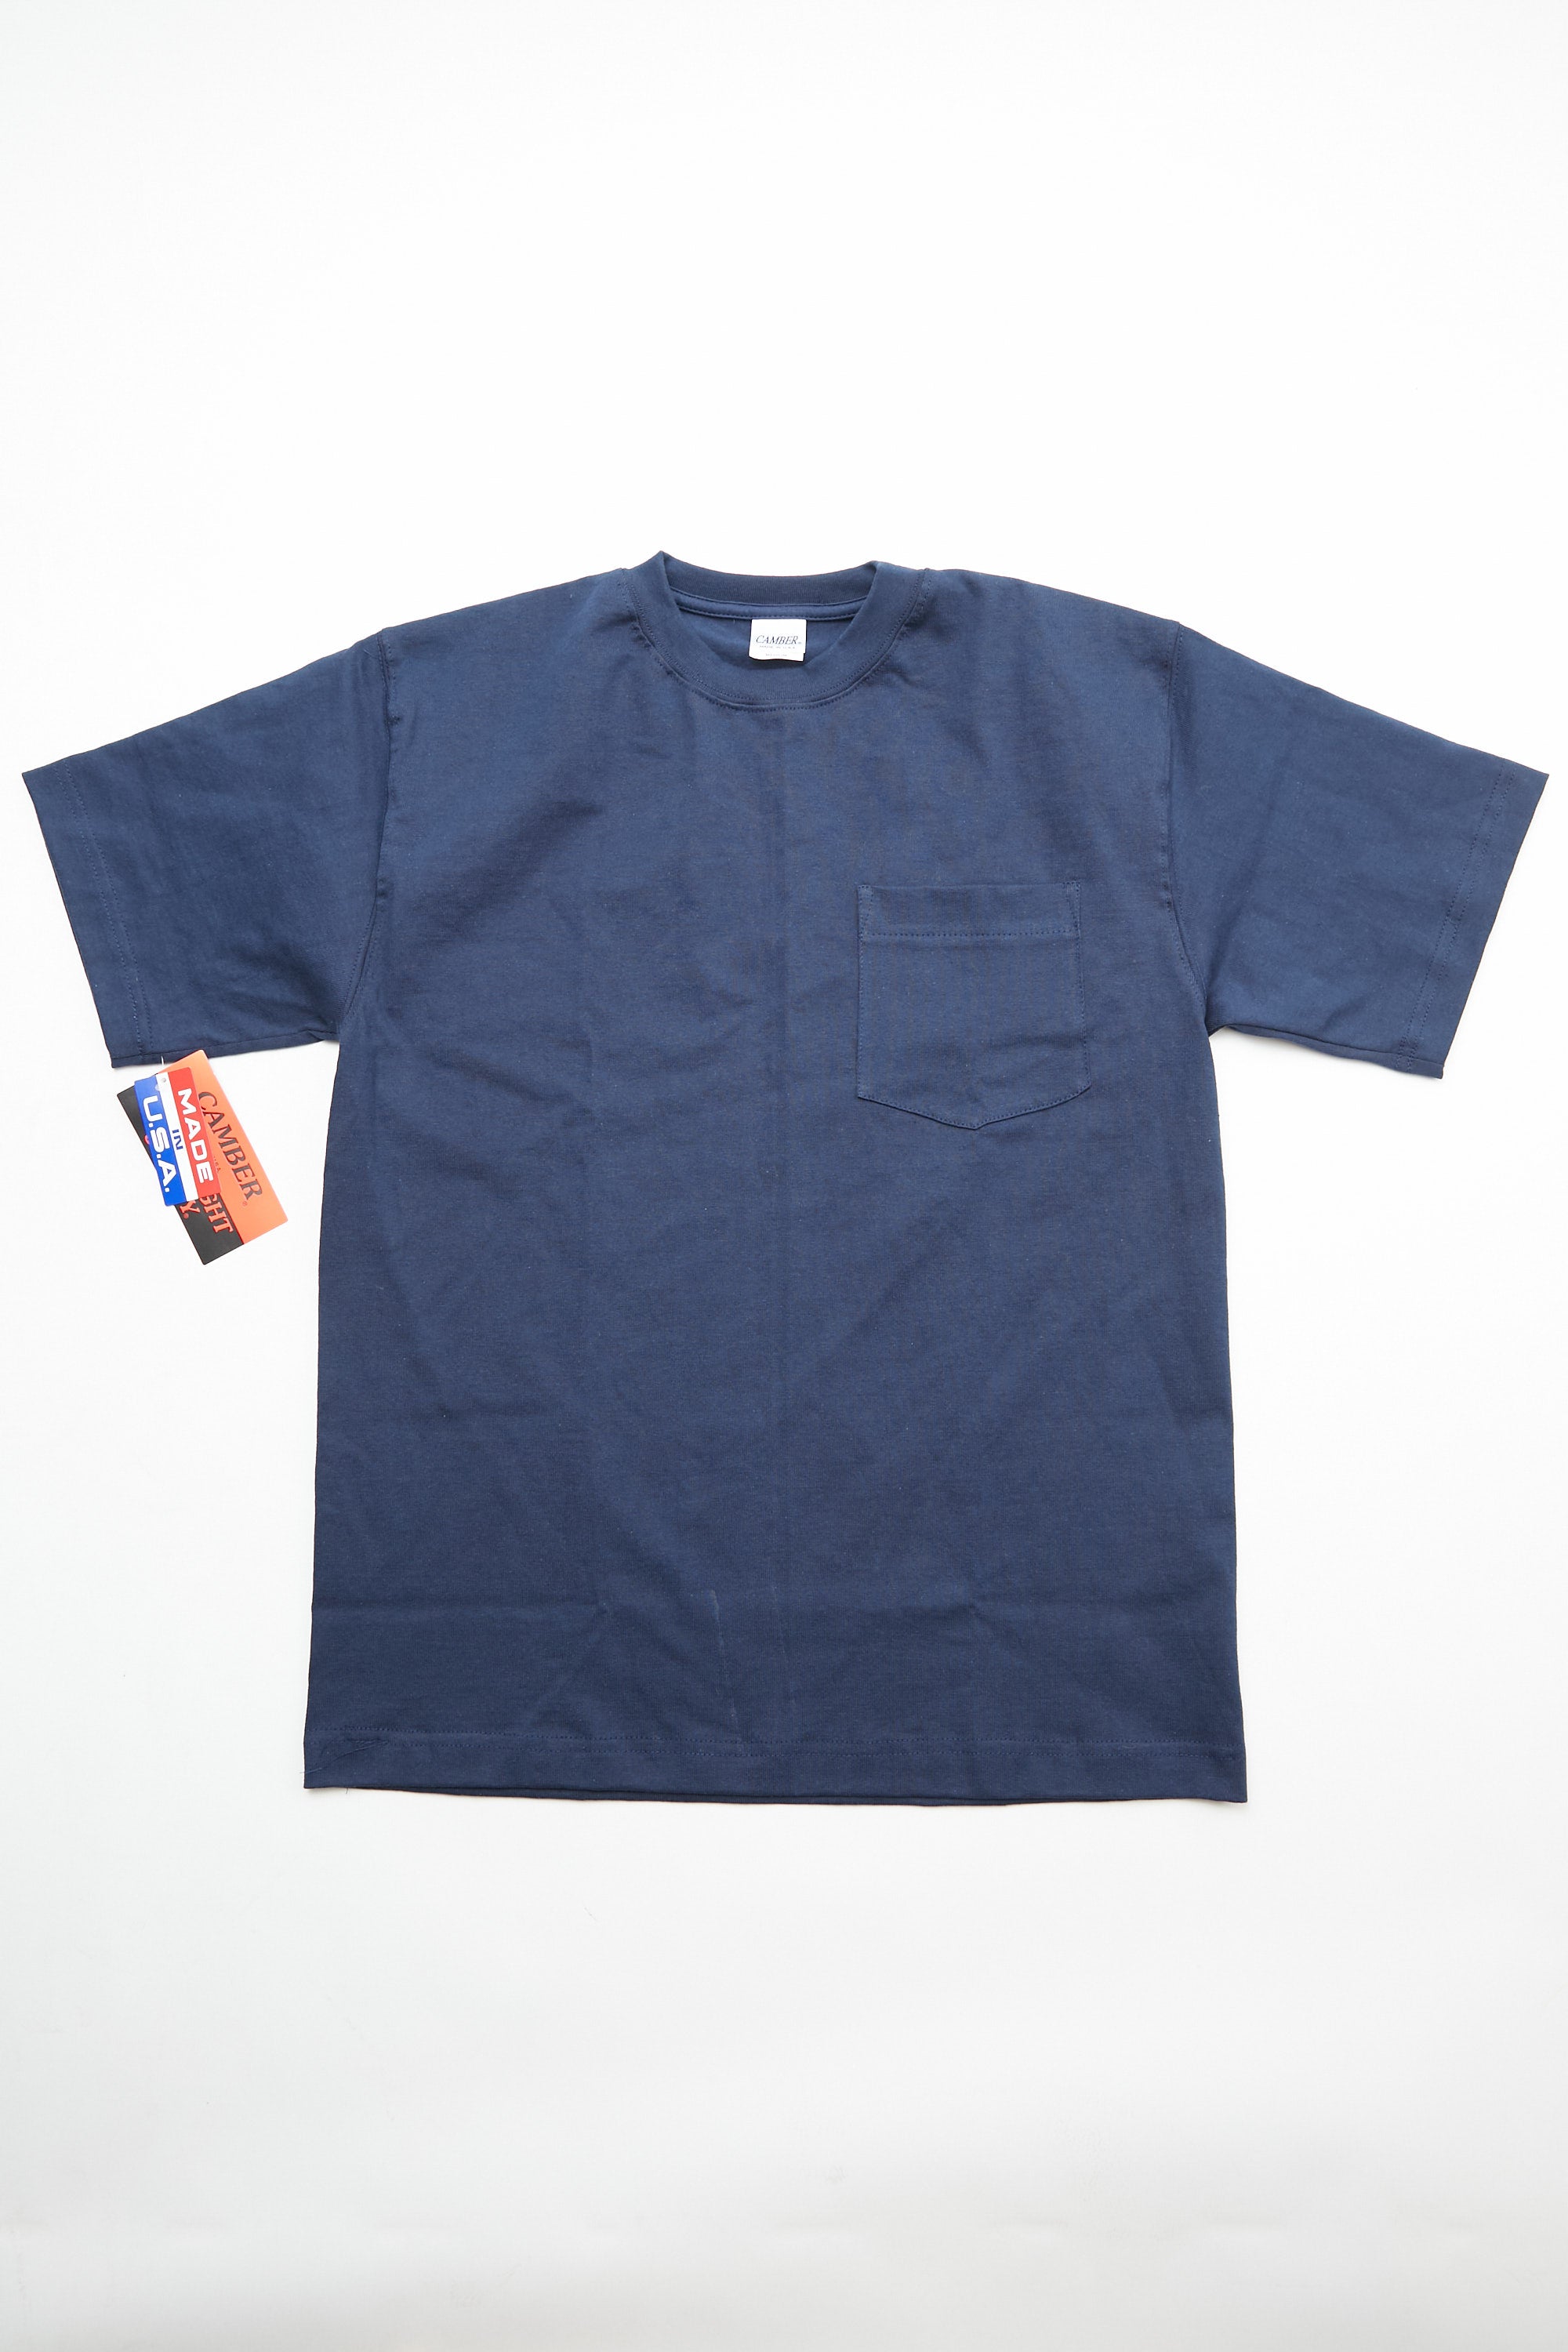 Camber USA : Pocket T-shirt : Navy